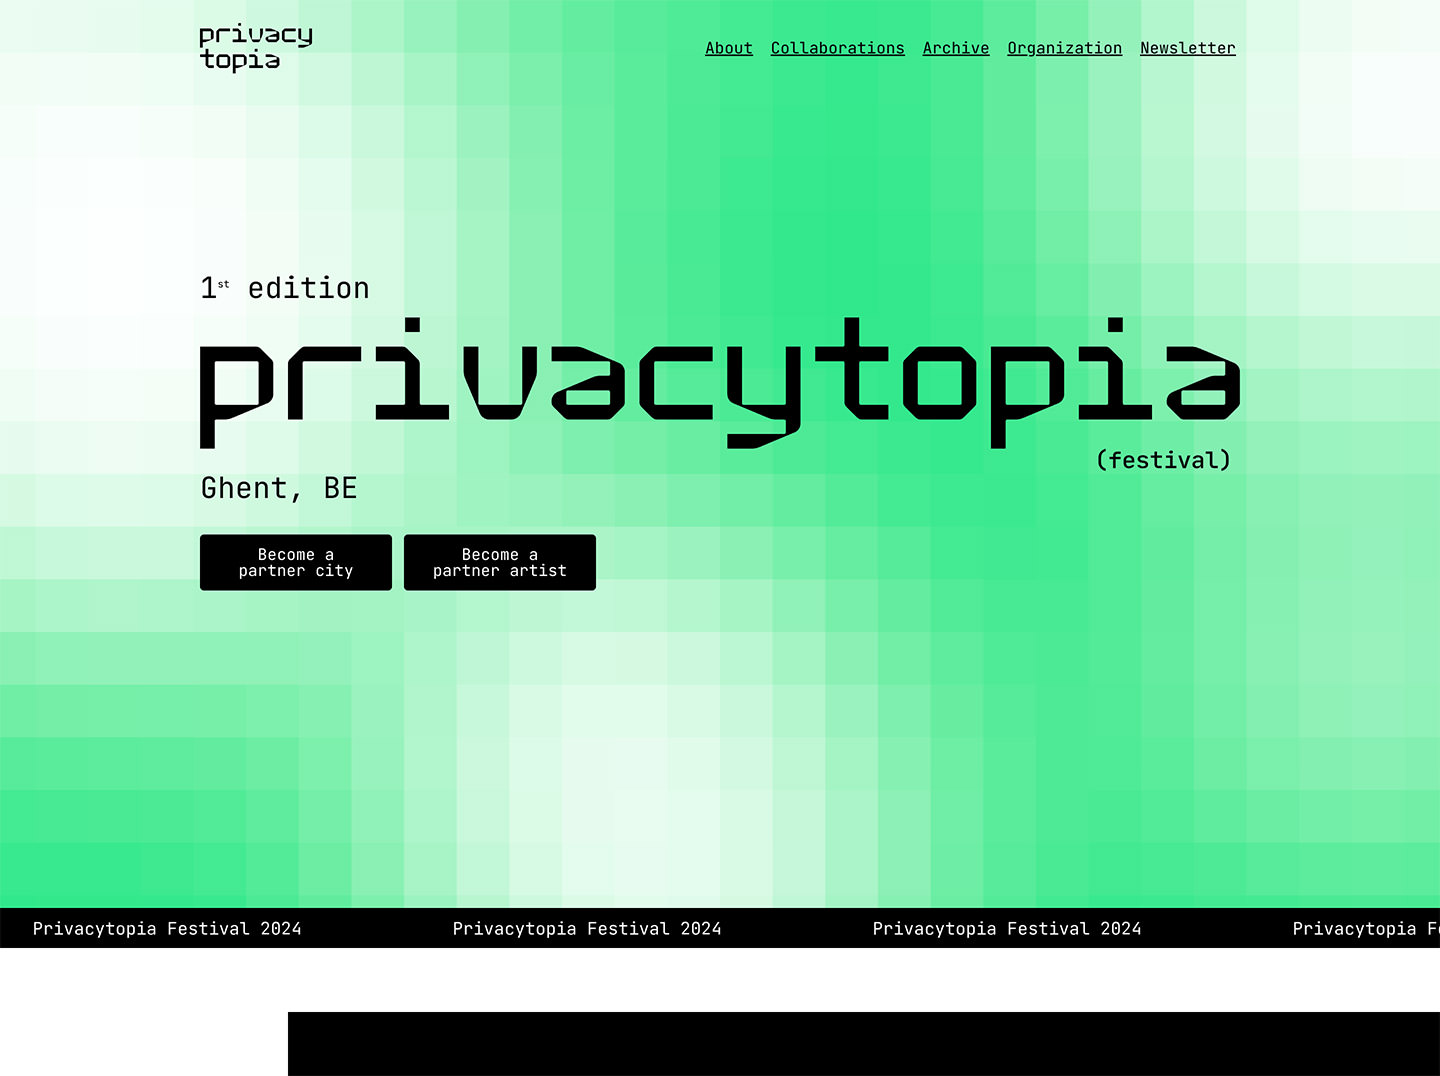 Privacytopia Festival - Development of Website